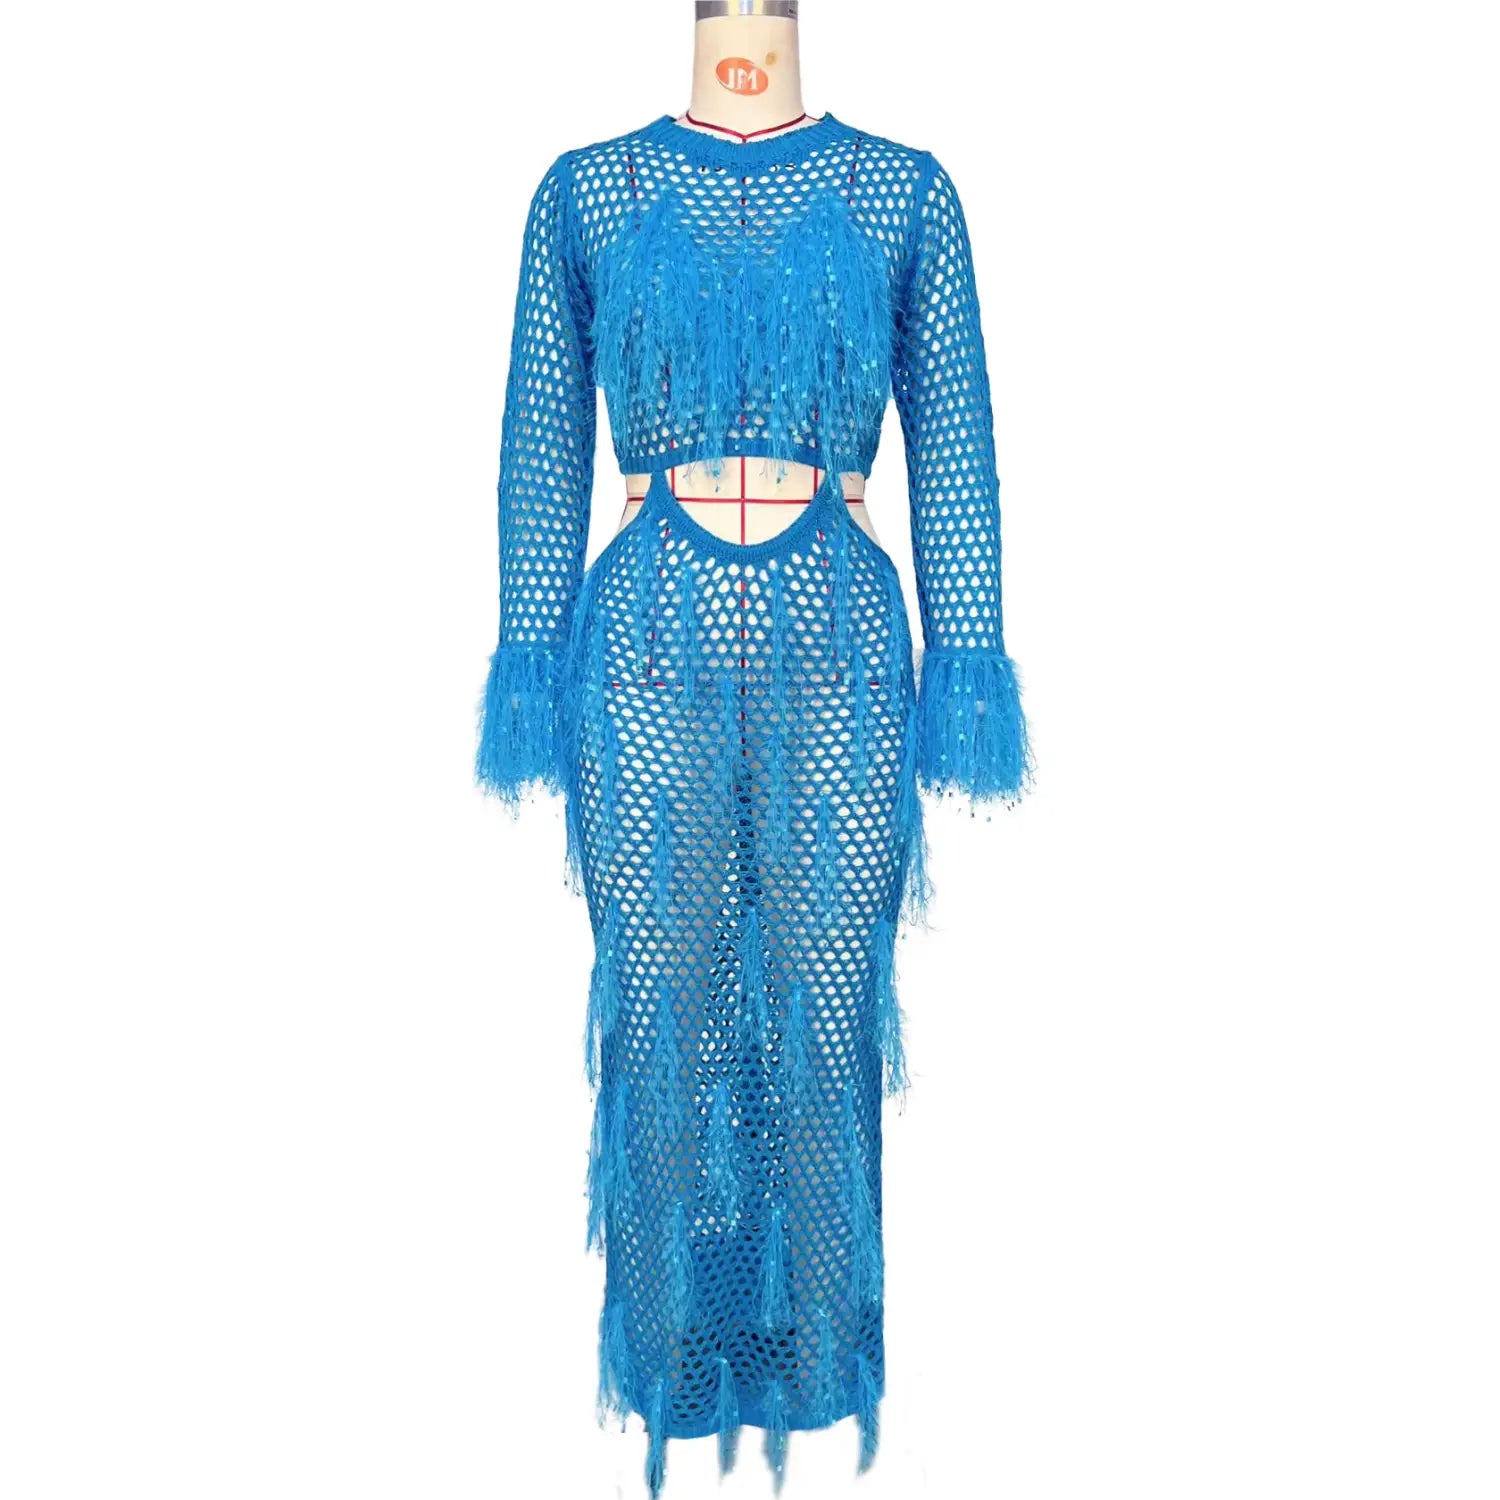 Boho Maxi Beach Dress - Handmade Knit With Mink Tassel Details